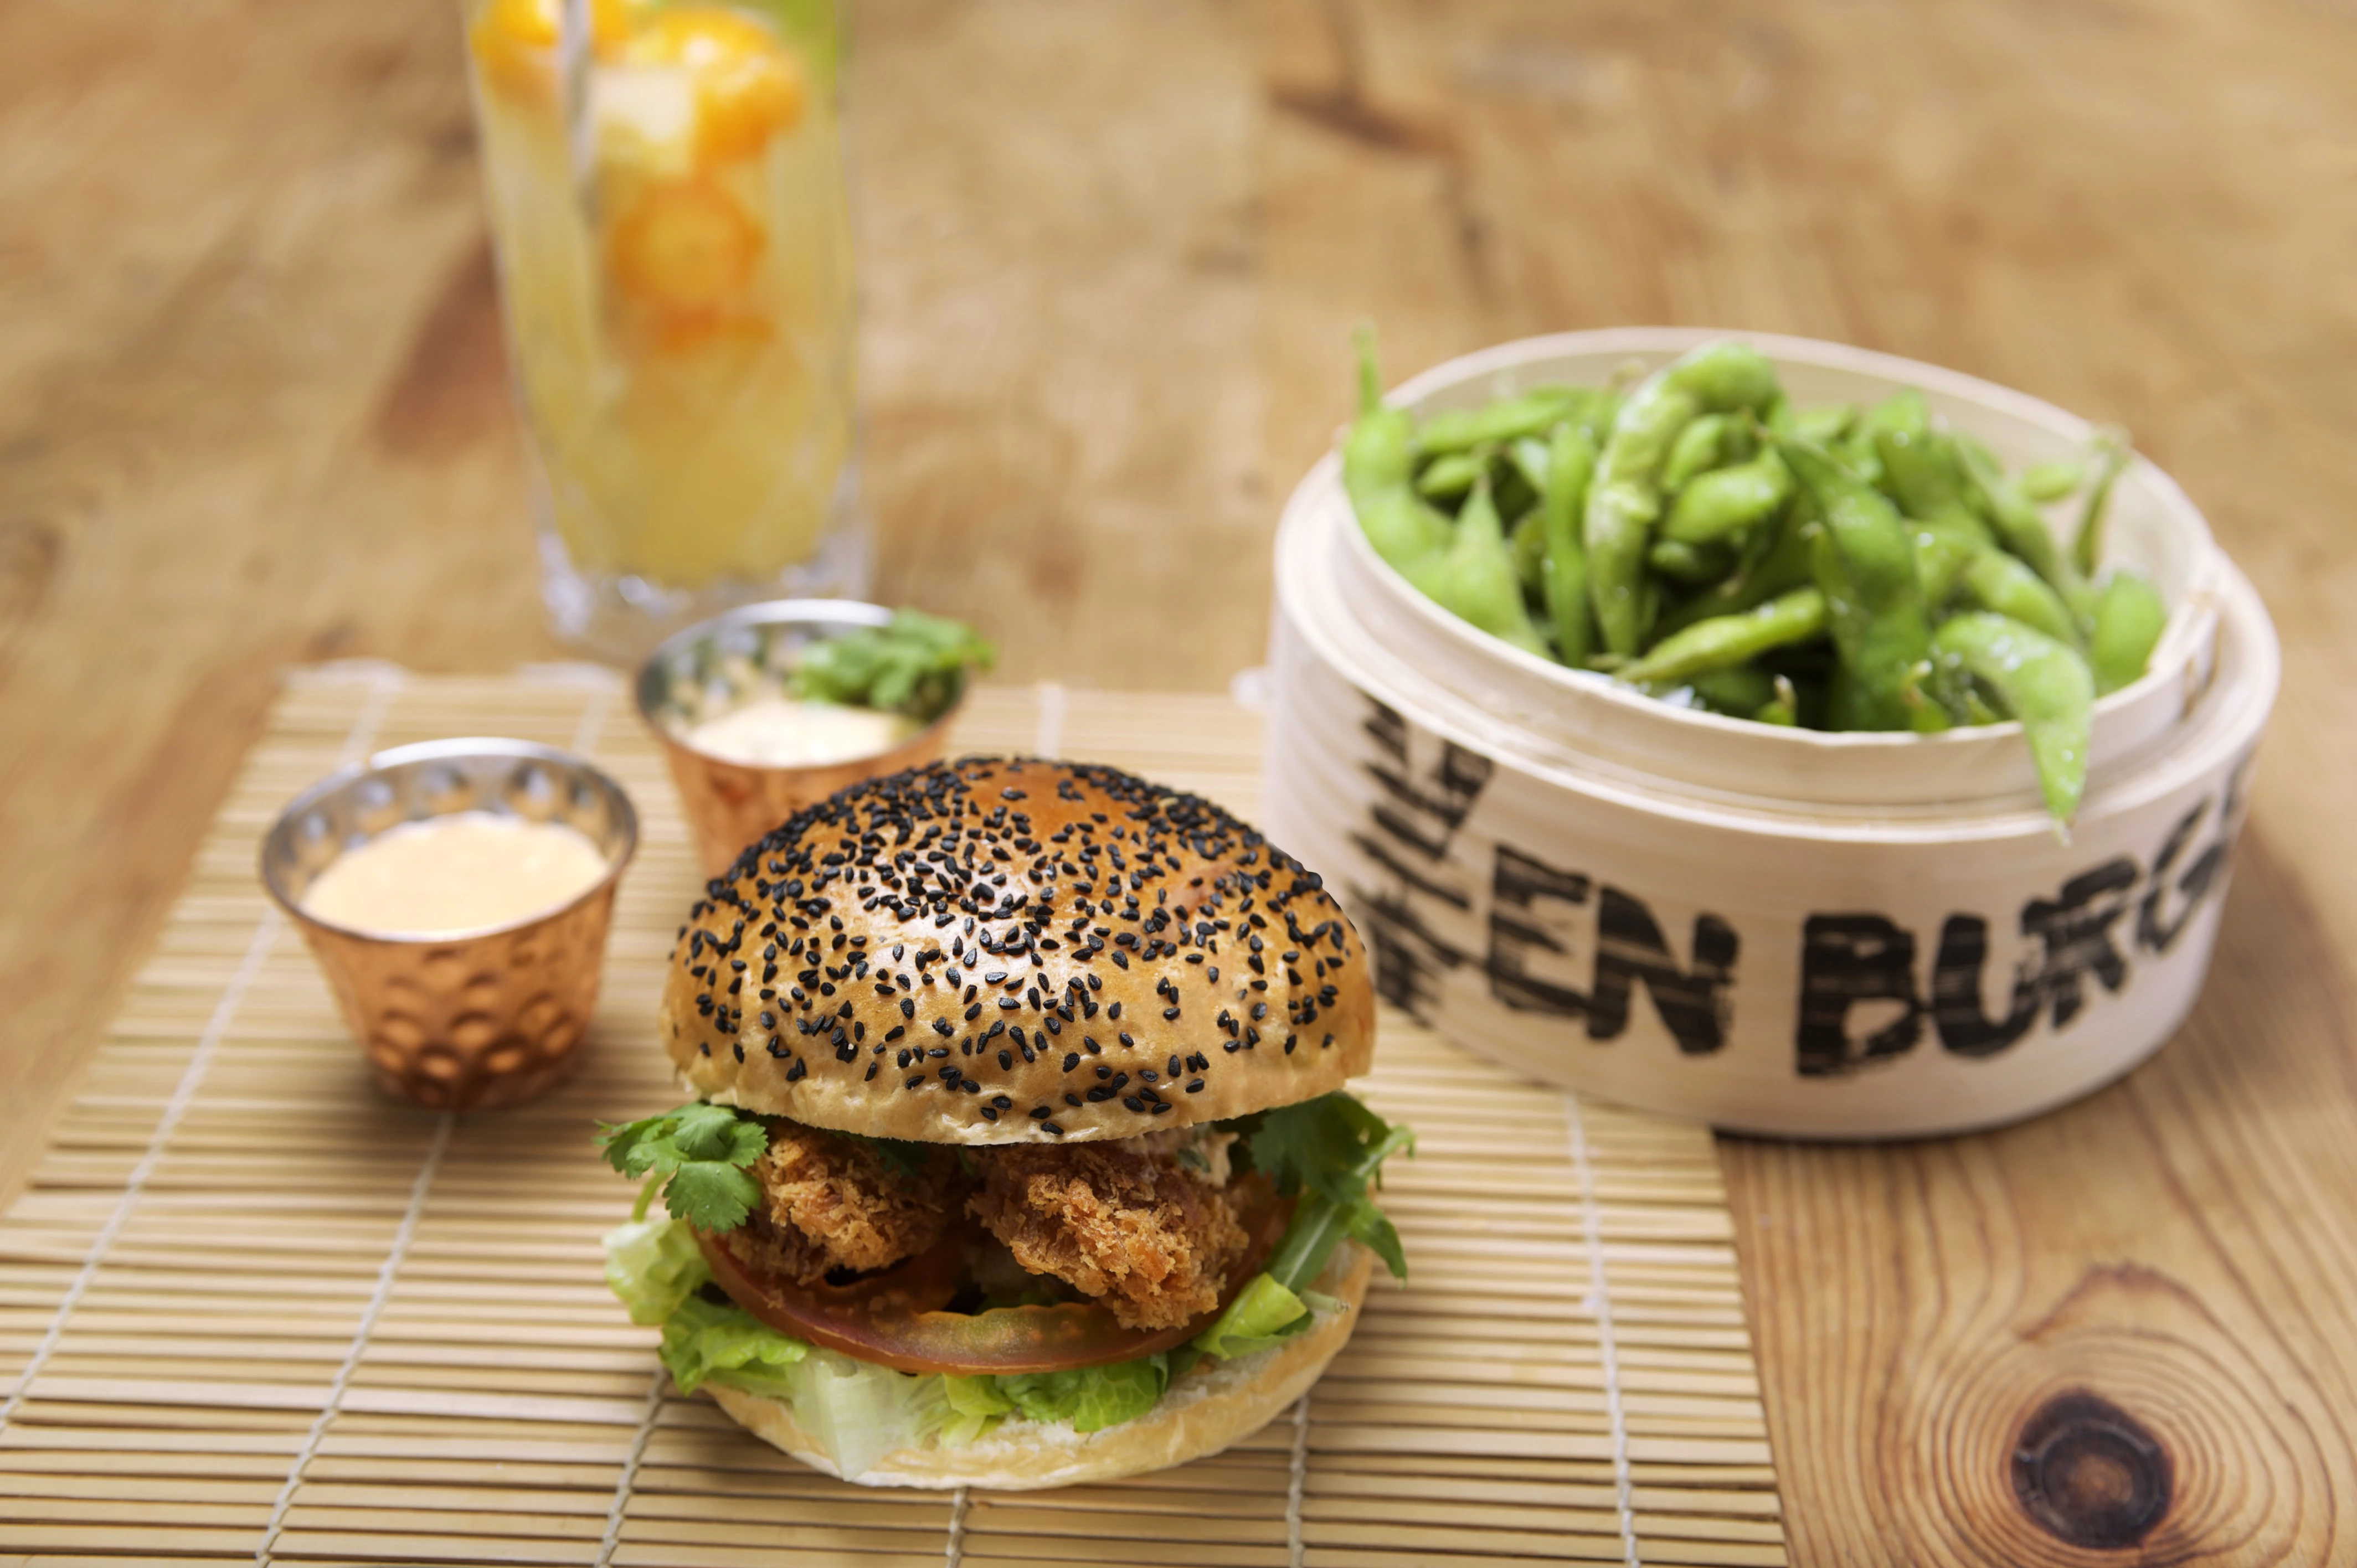 Yen Burger was founded by restaurateur Yen Nguyen